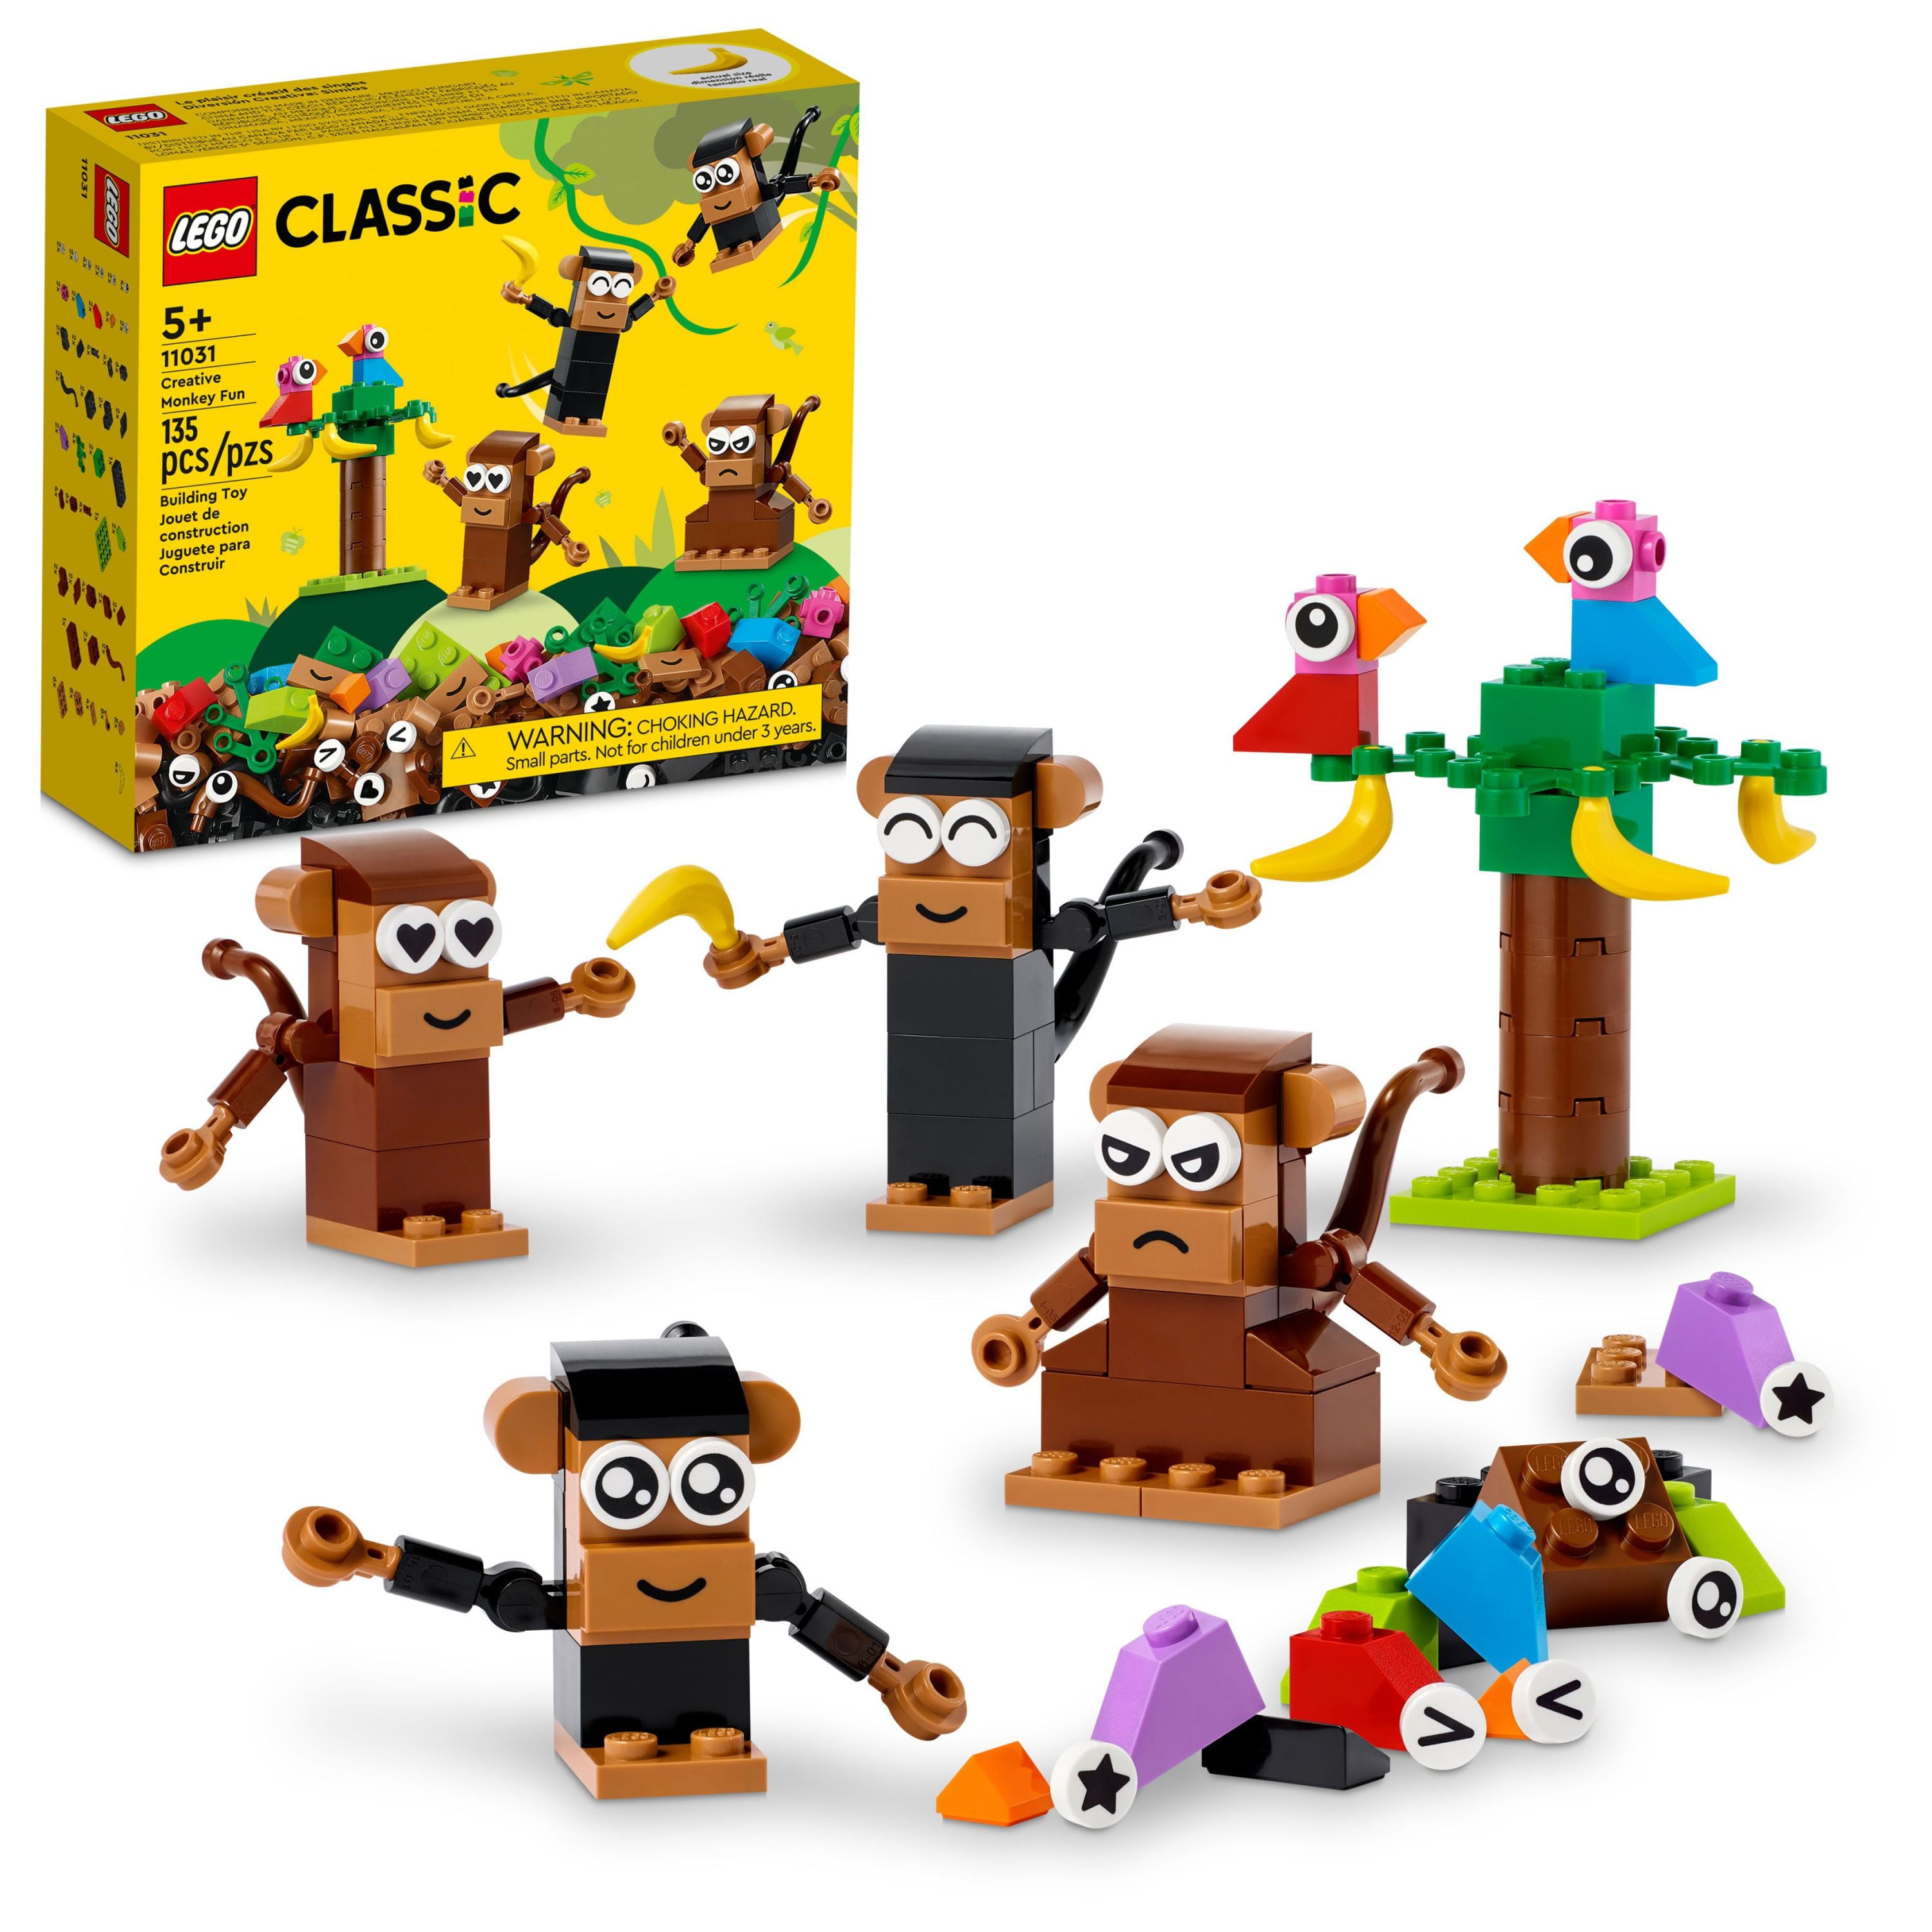 LEGO Classic Creative Monkey Fun 11031 Building Toy Set (135 Pieces) $18.20